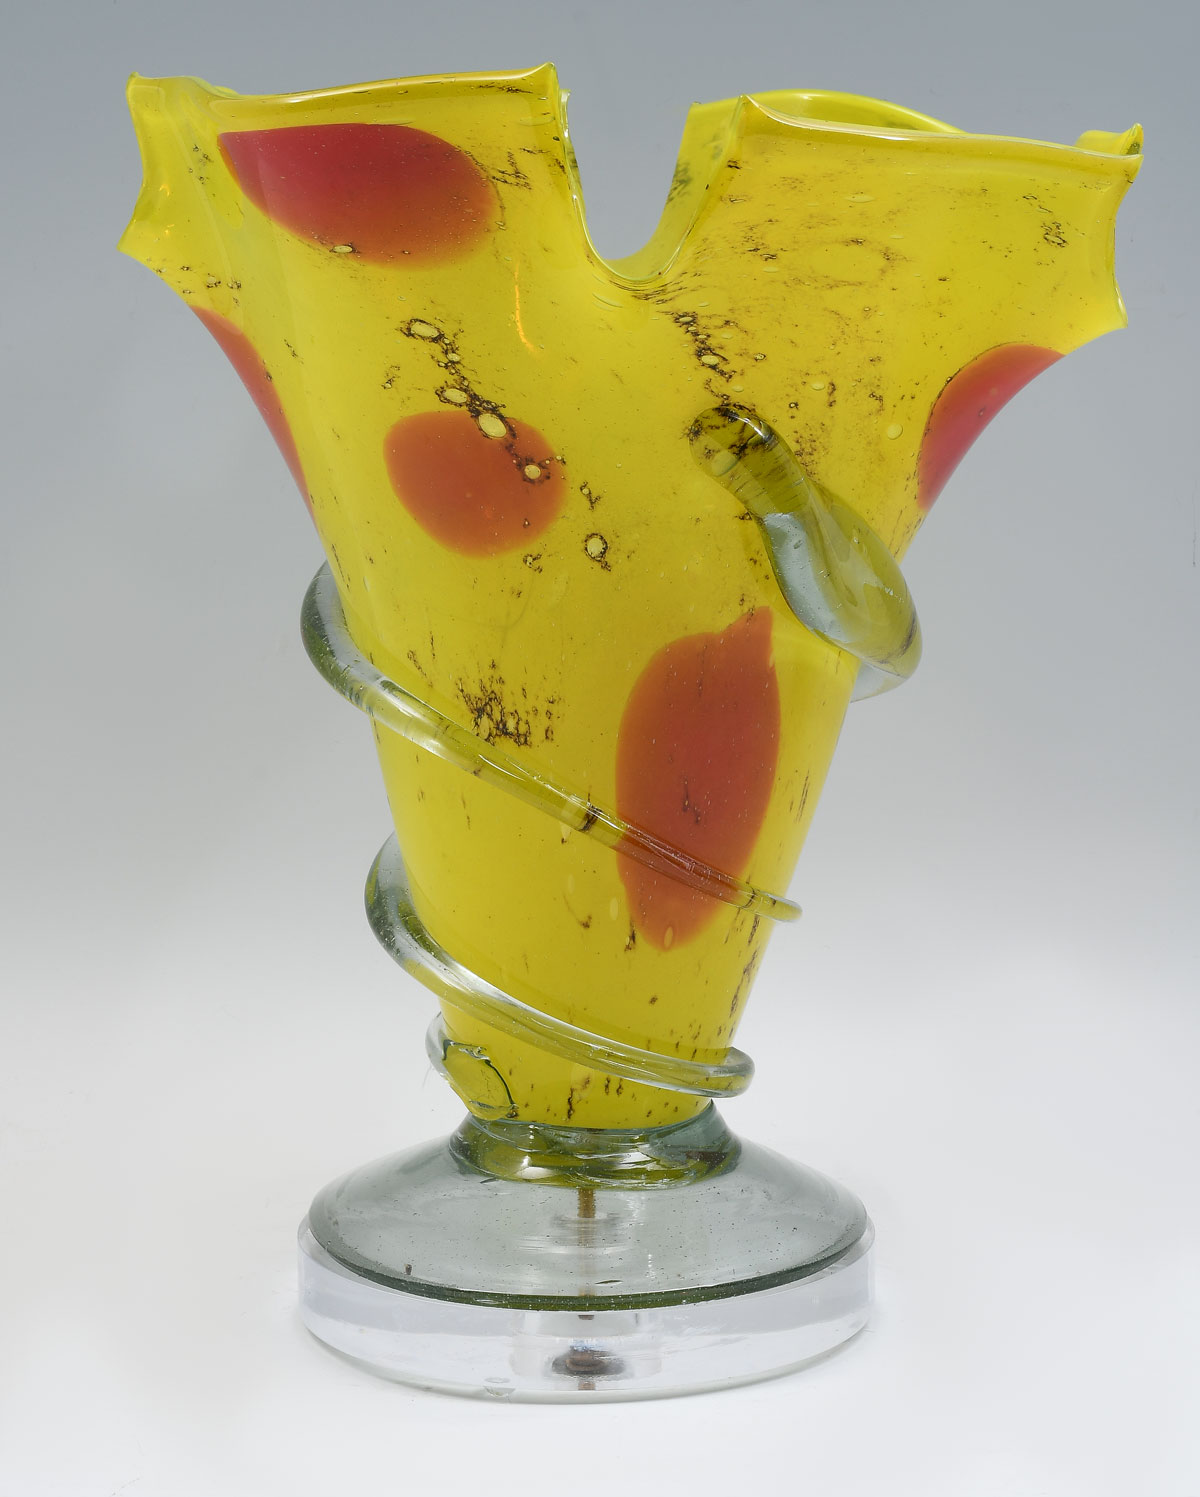 LARGE MODERN ART GLASS VASE: Yellow